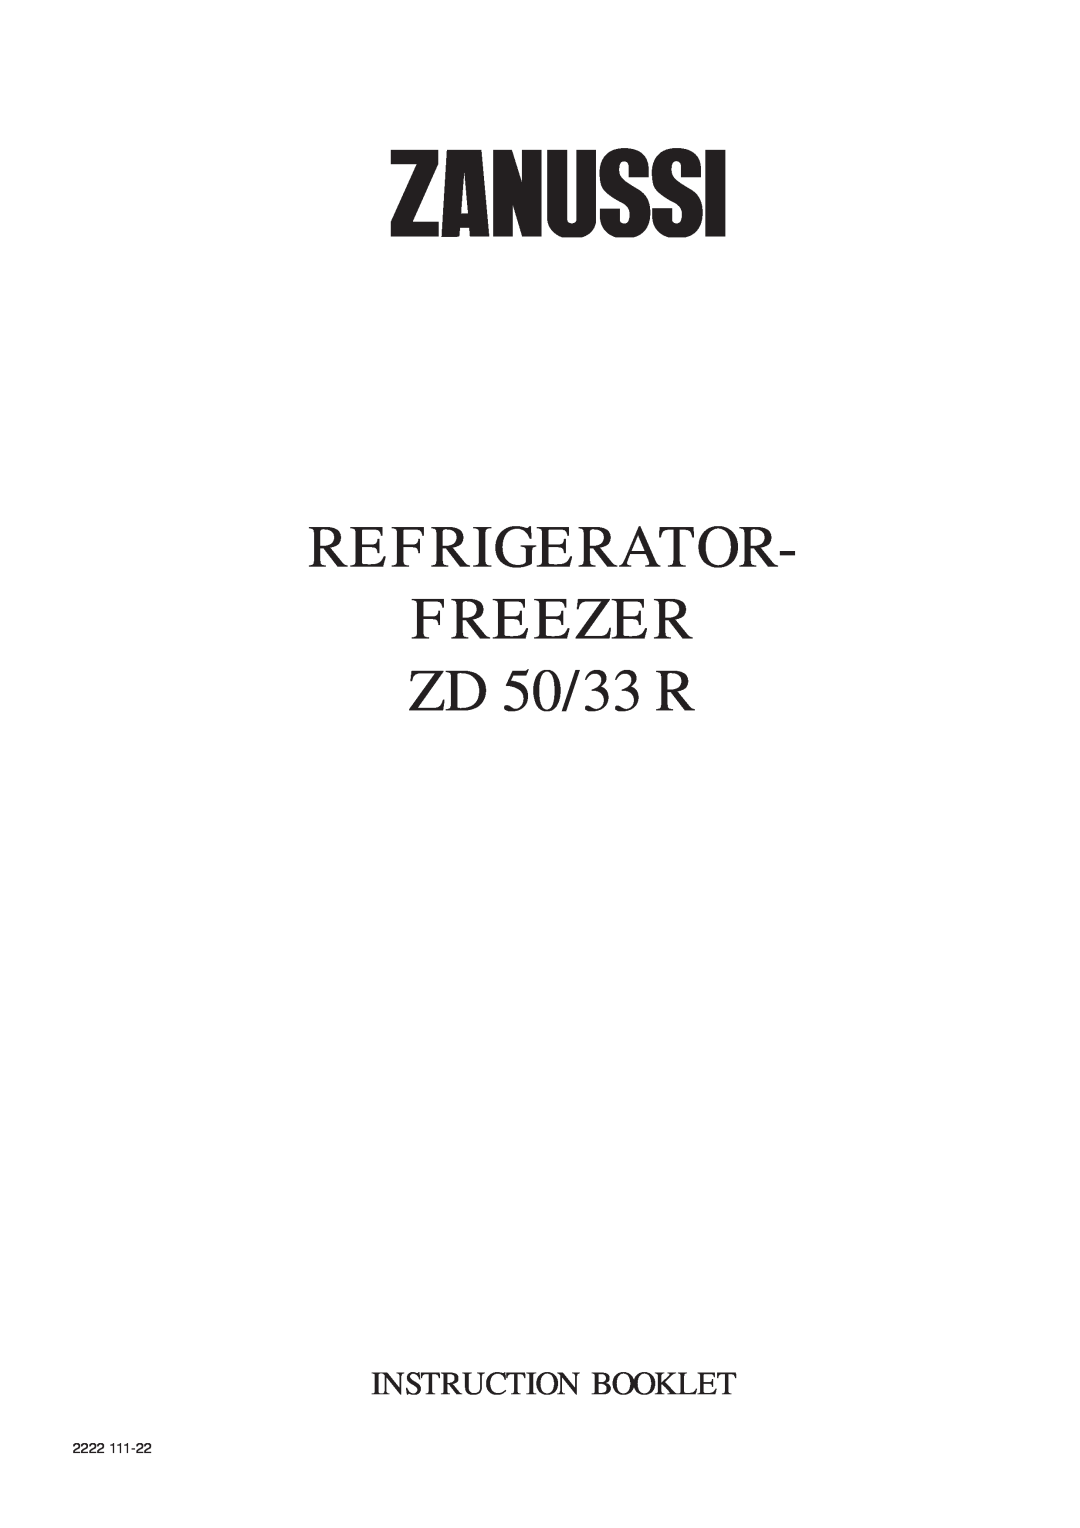 Zanussi manual REFRIGERATOR FREEZER ZD 50/33 R, Instruction Booklet, 2222 